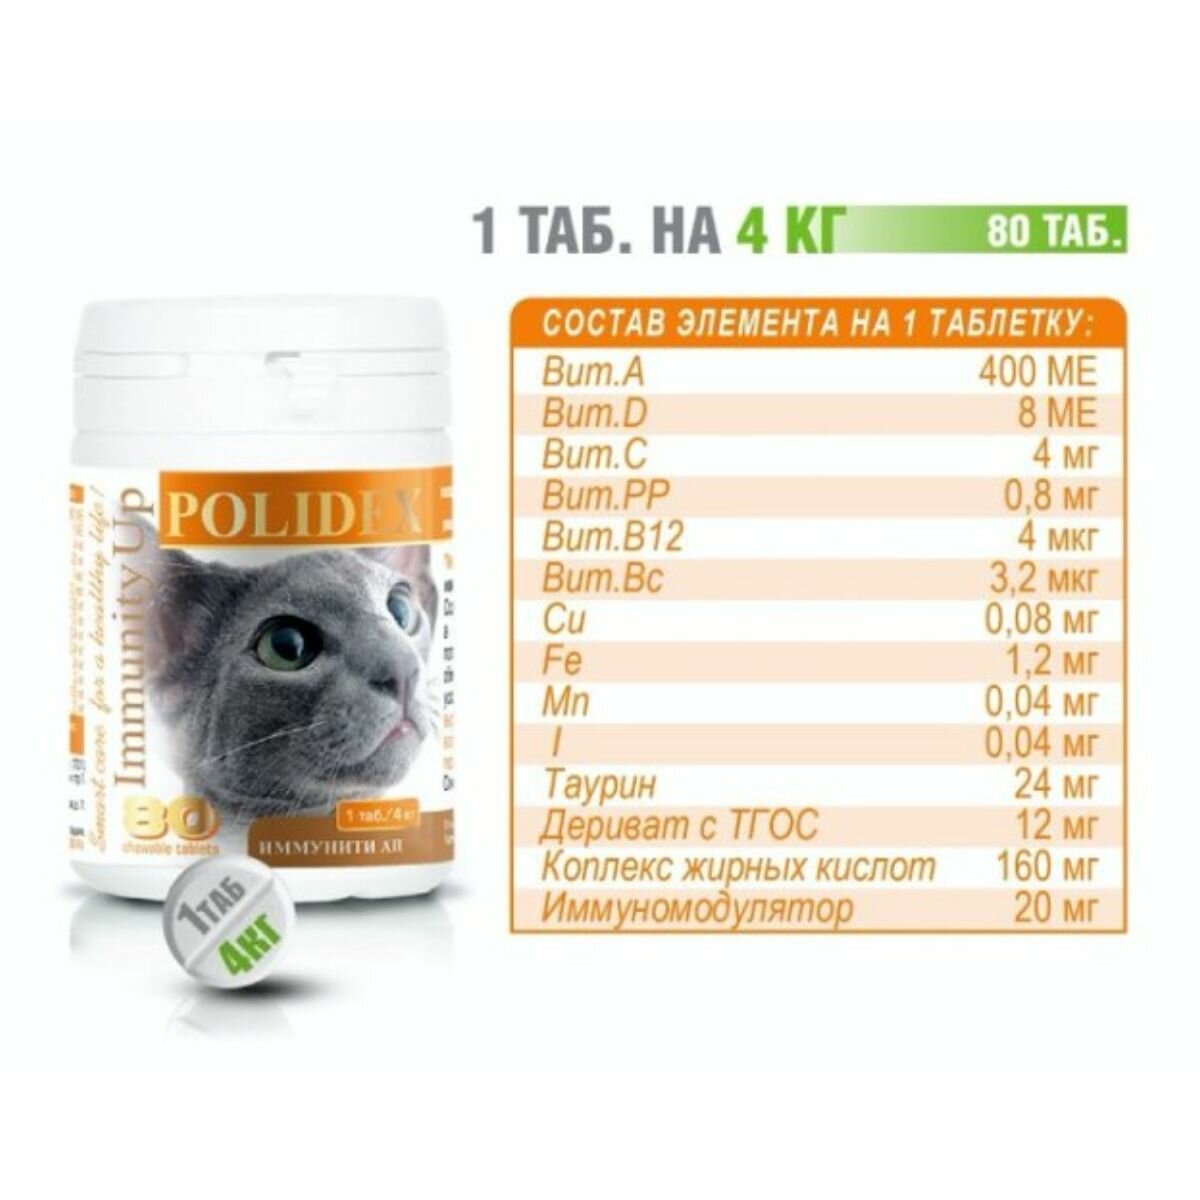 Polidex Полидекс Иммунити Ап Таблетки для урепления иммунитета у кошек, 80 таблеток - фото №14